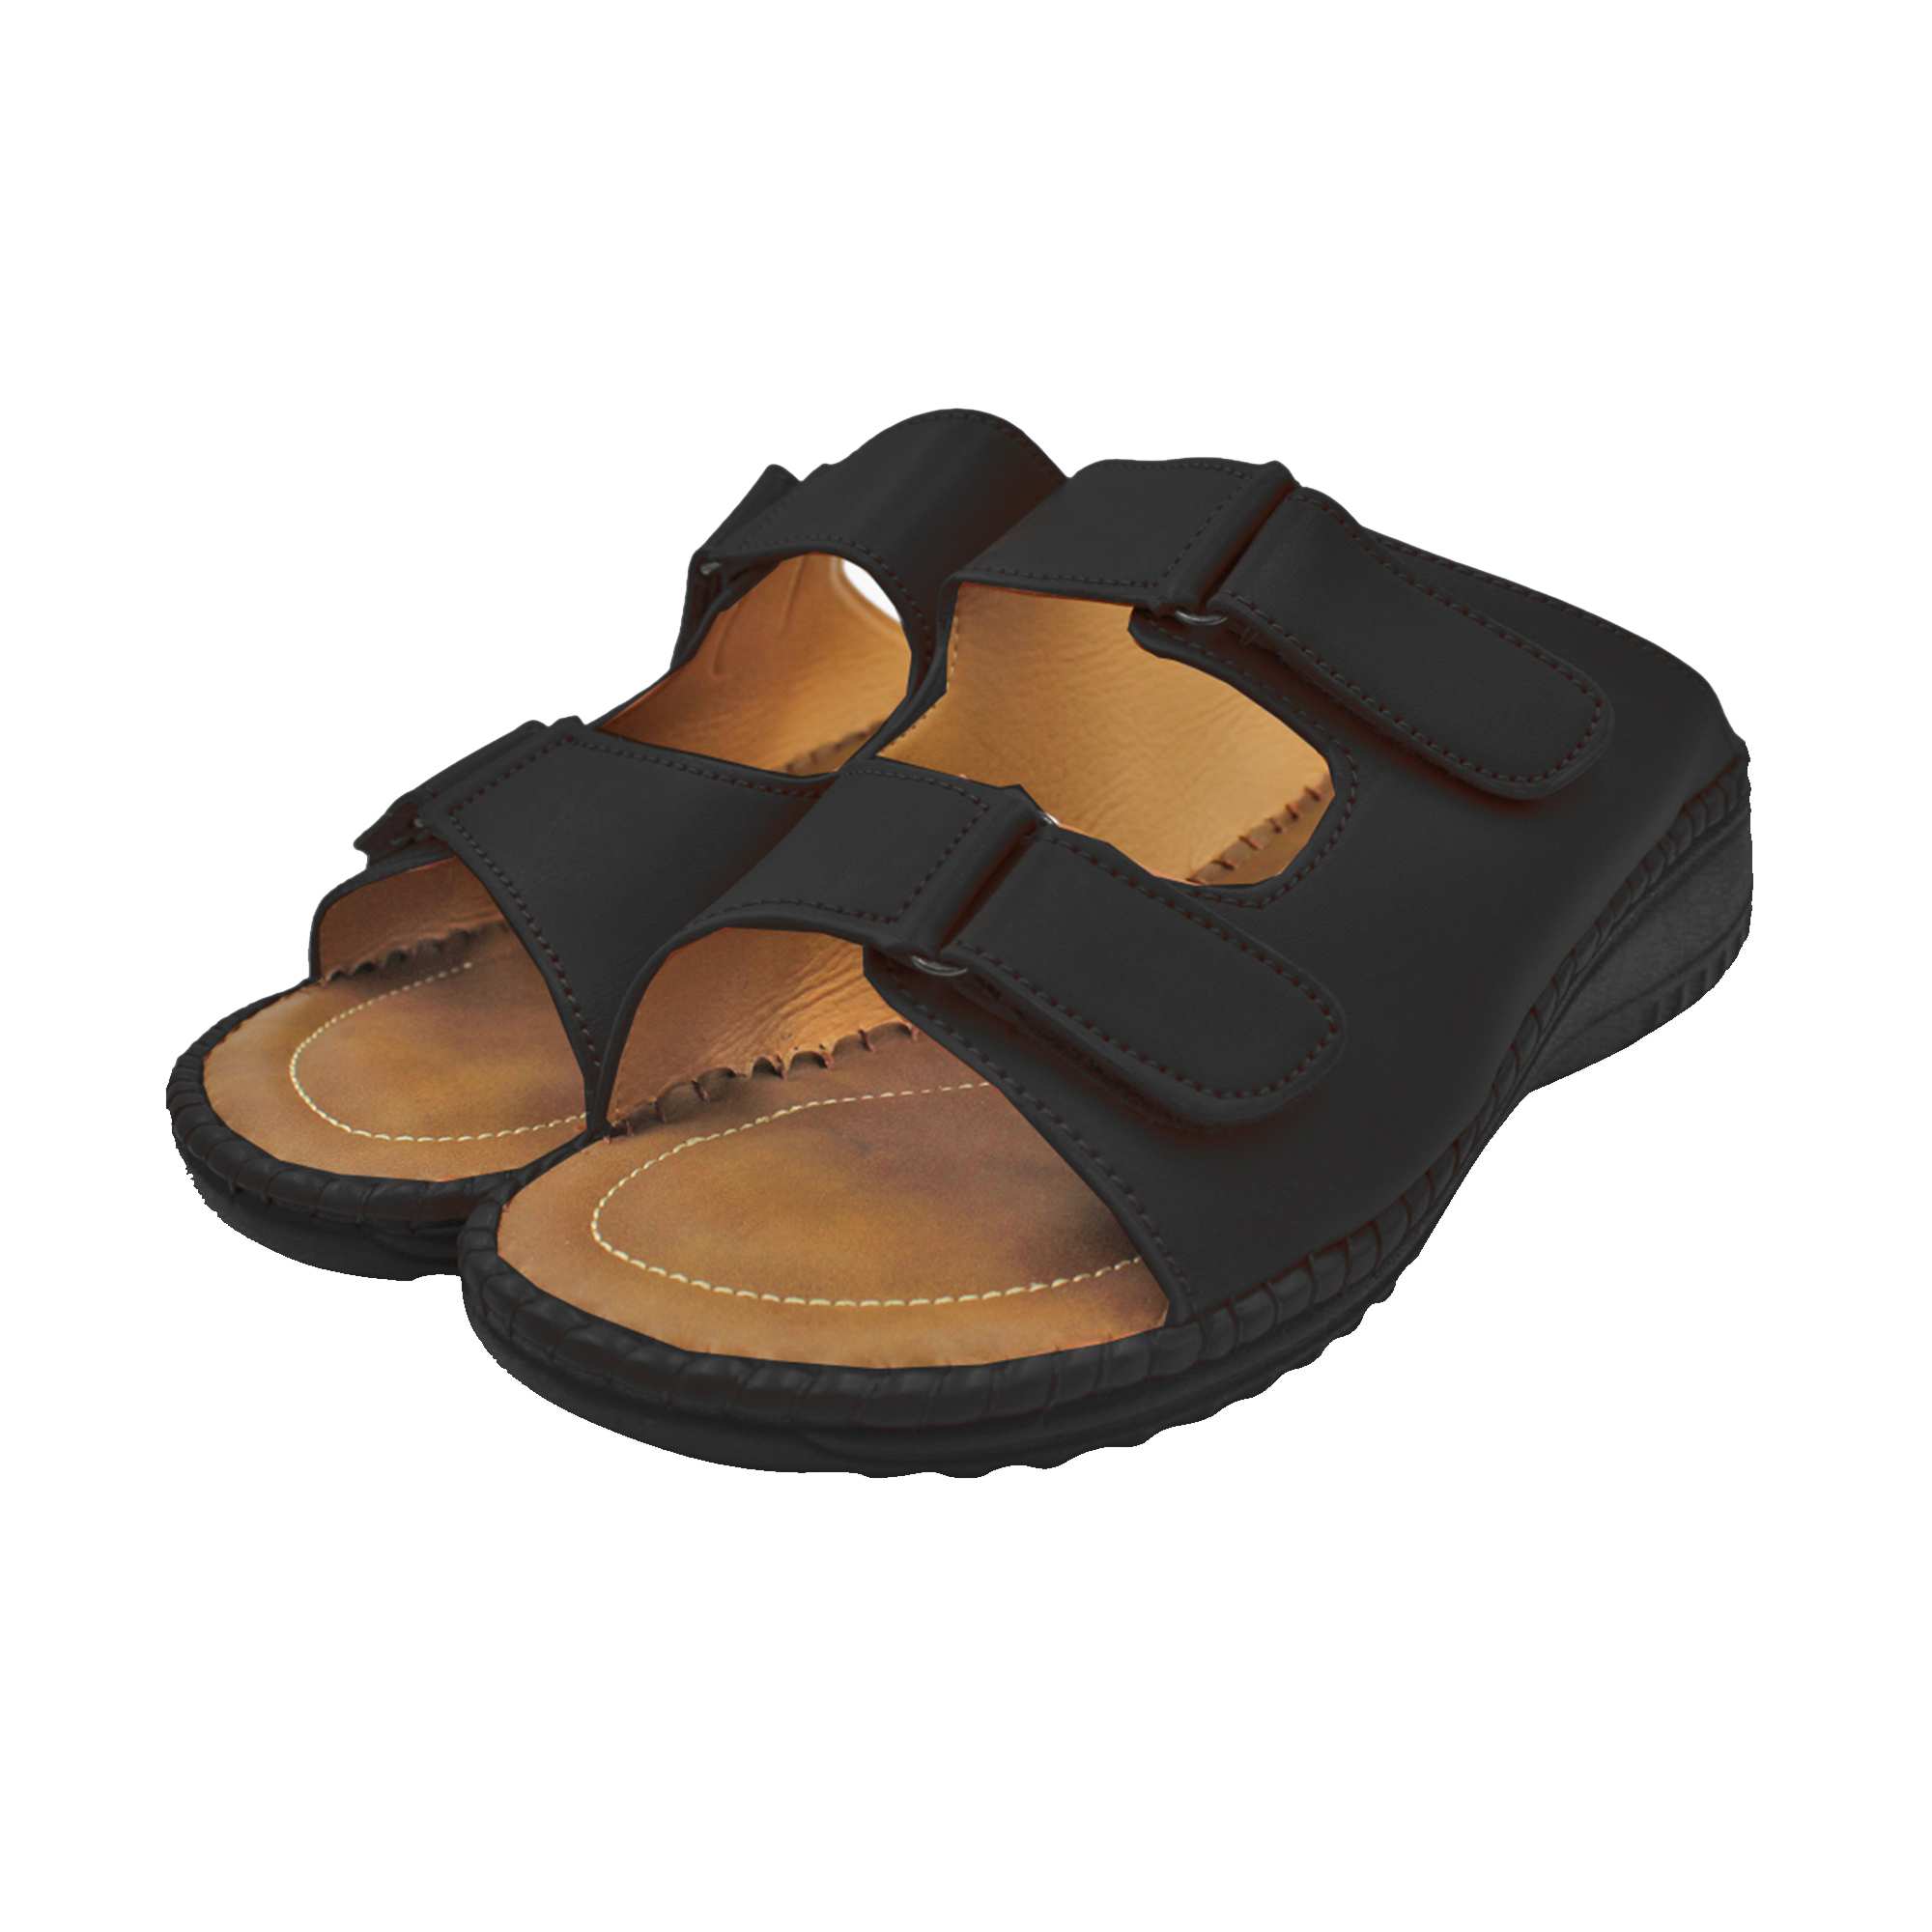 Women's Sandals Leather Double Strap Slides Soft Comfort Shoes | eBay